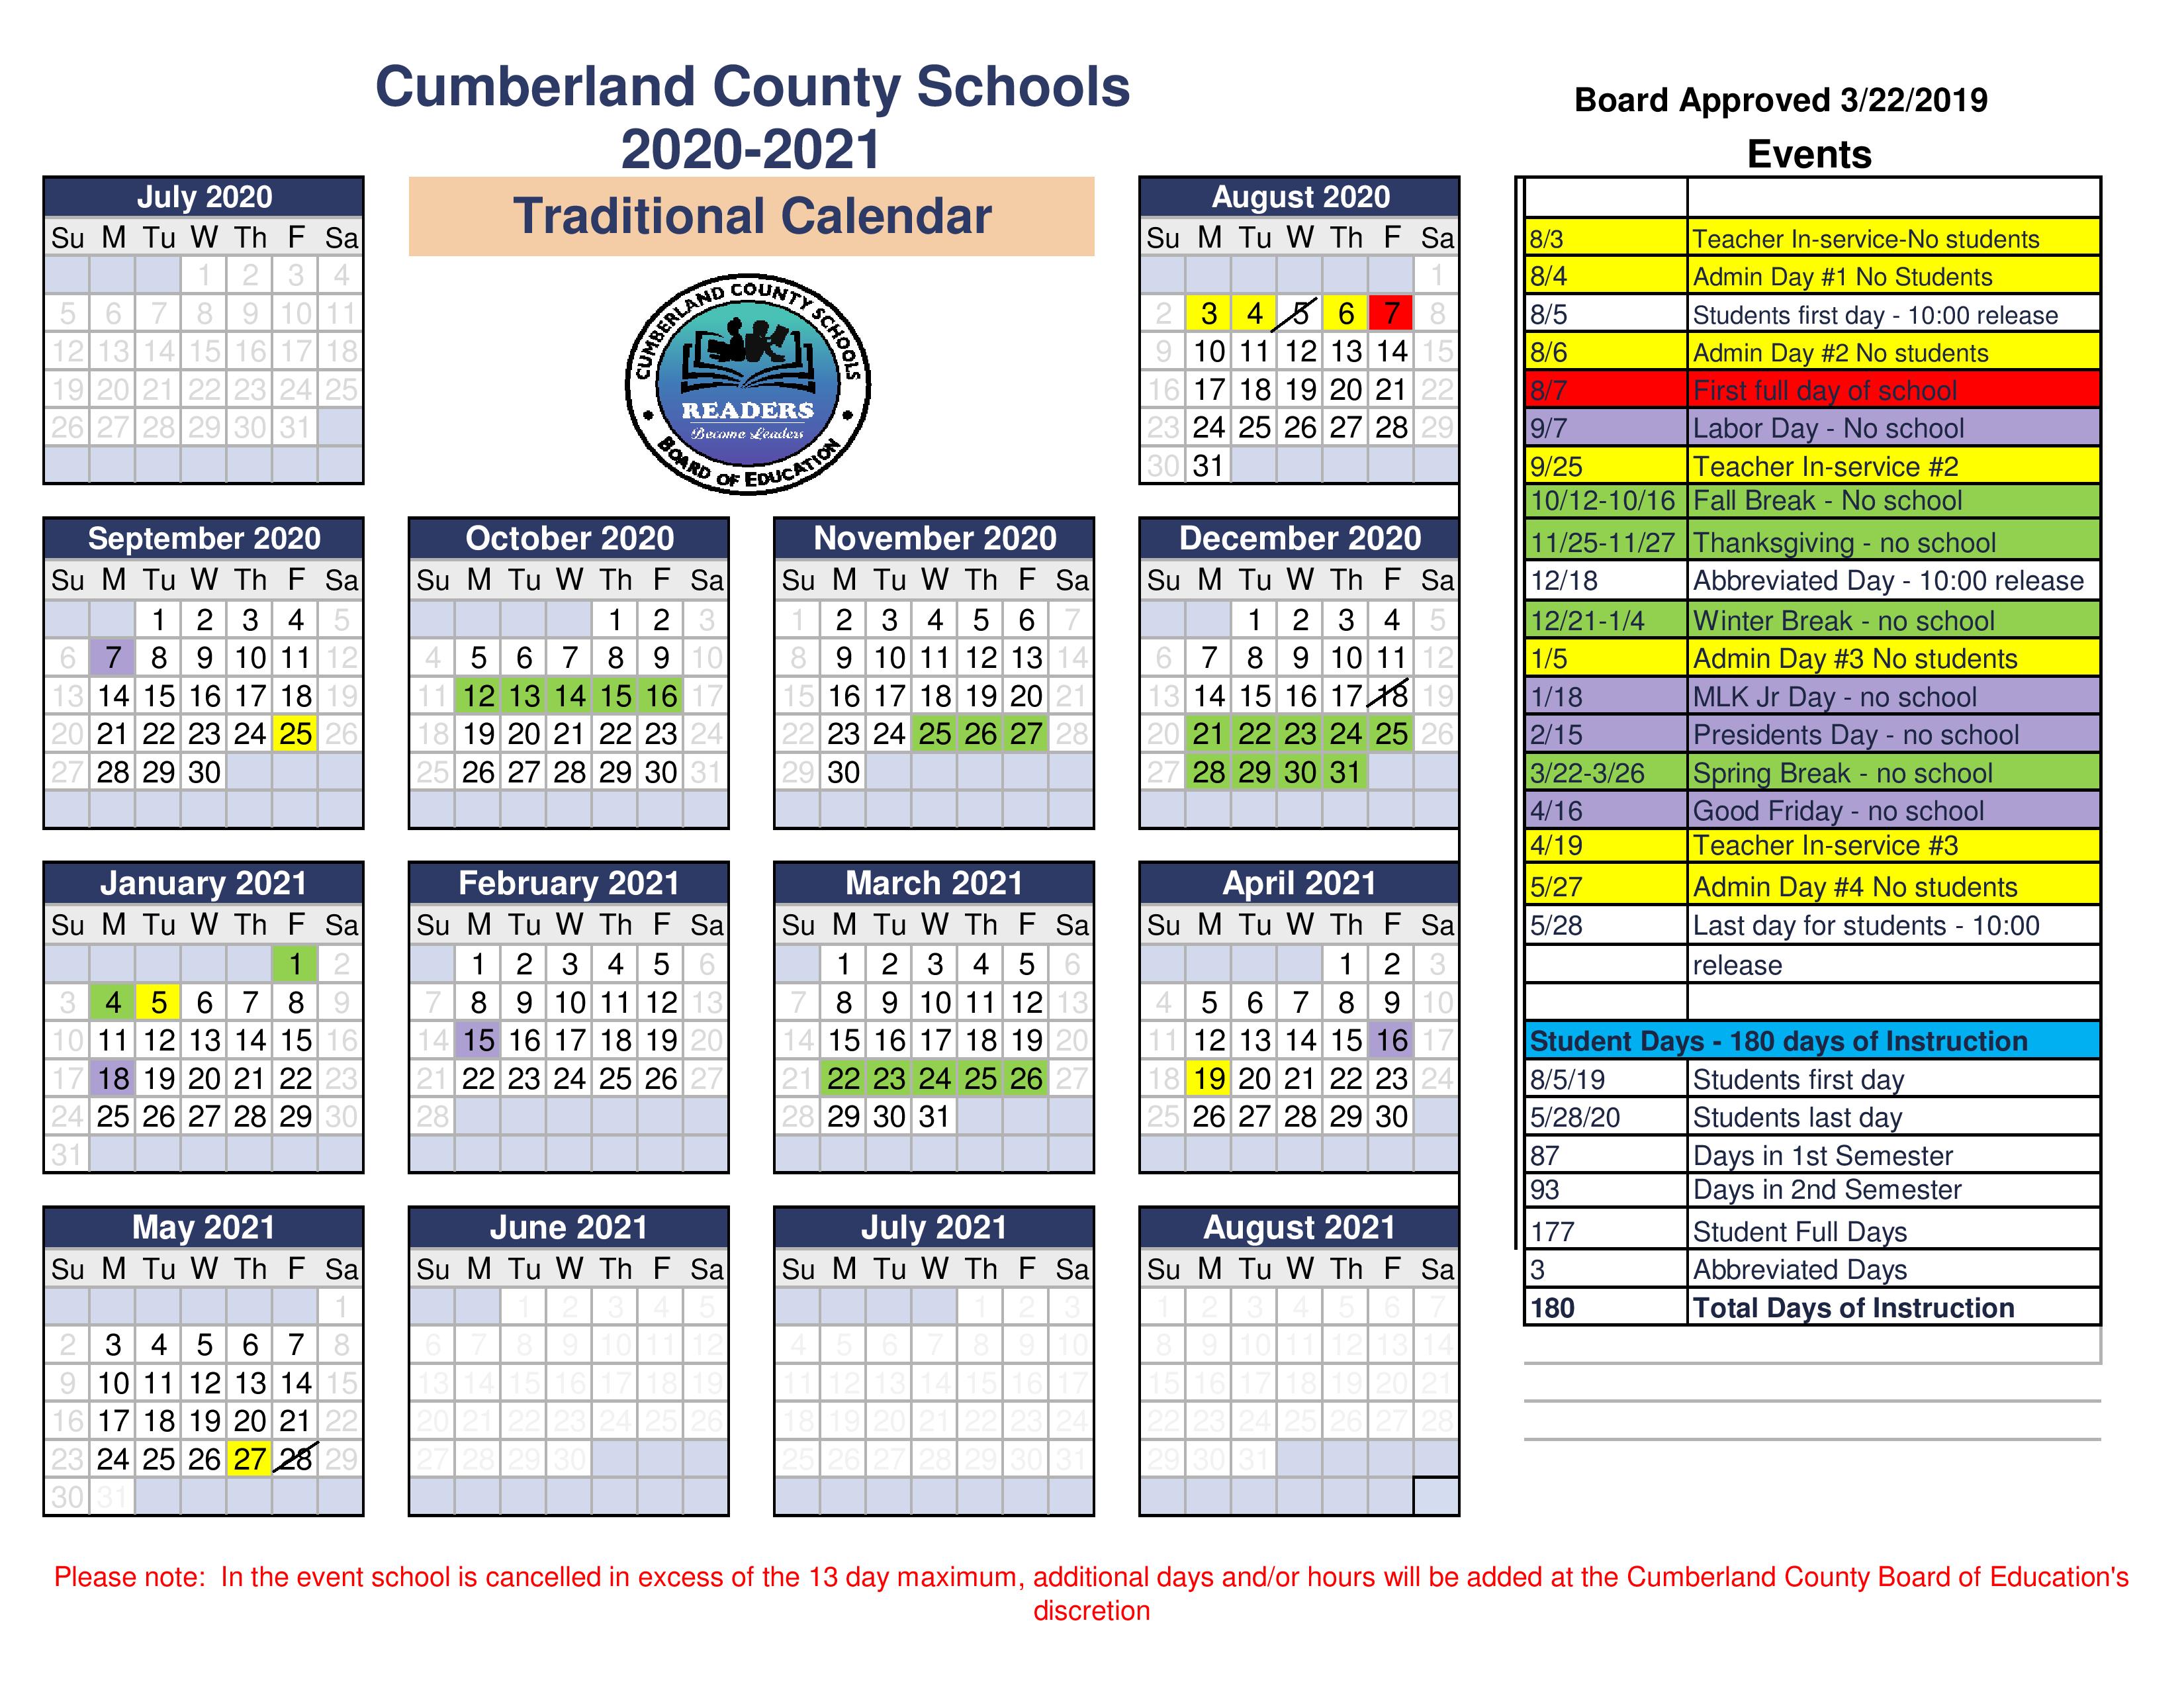 cumberland-county-school-district